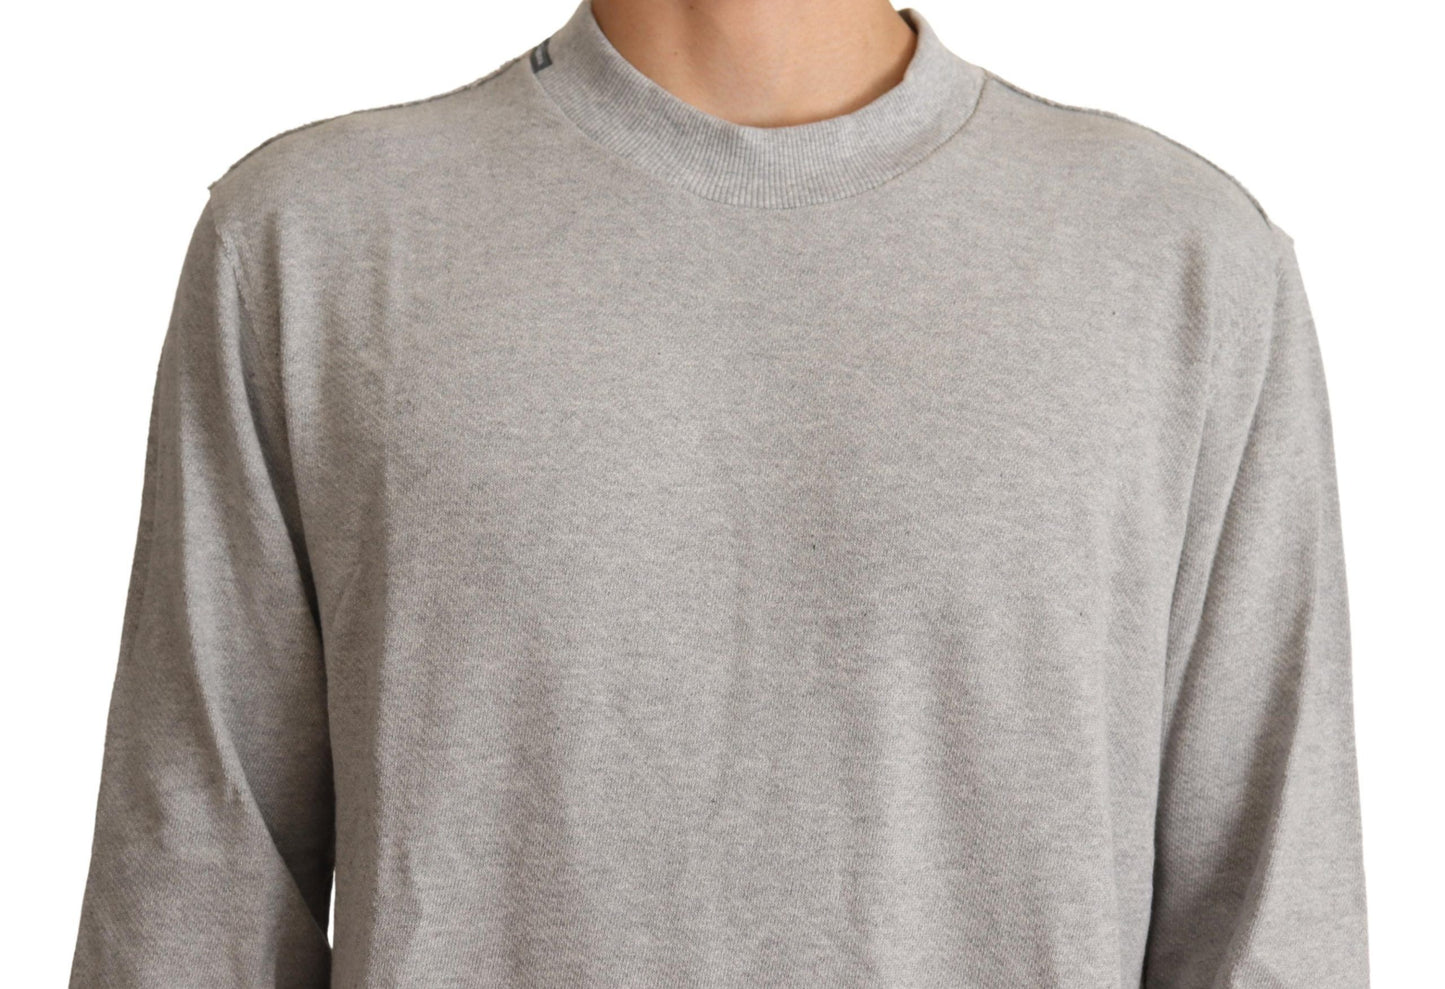 Dolce & Gabbana Gray Cotton Crewneck Pullover Sweater